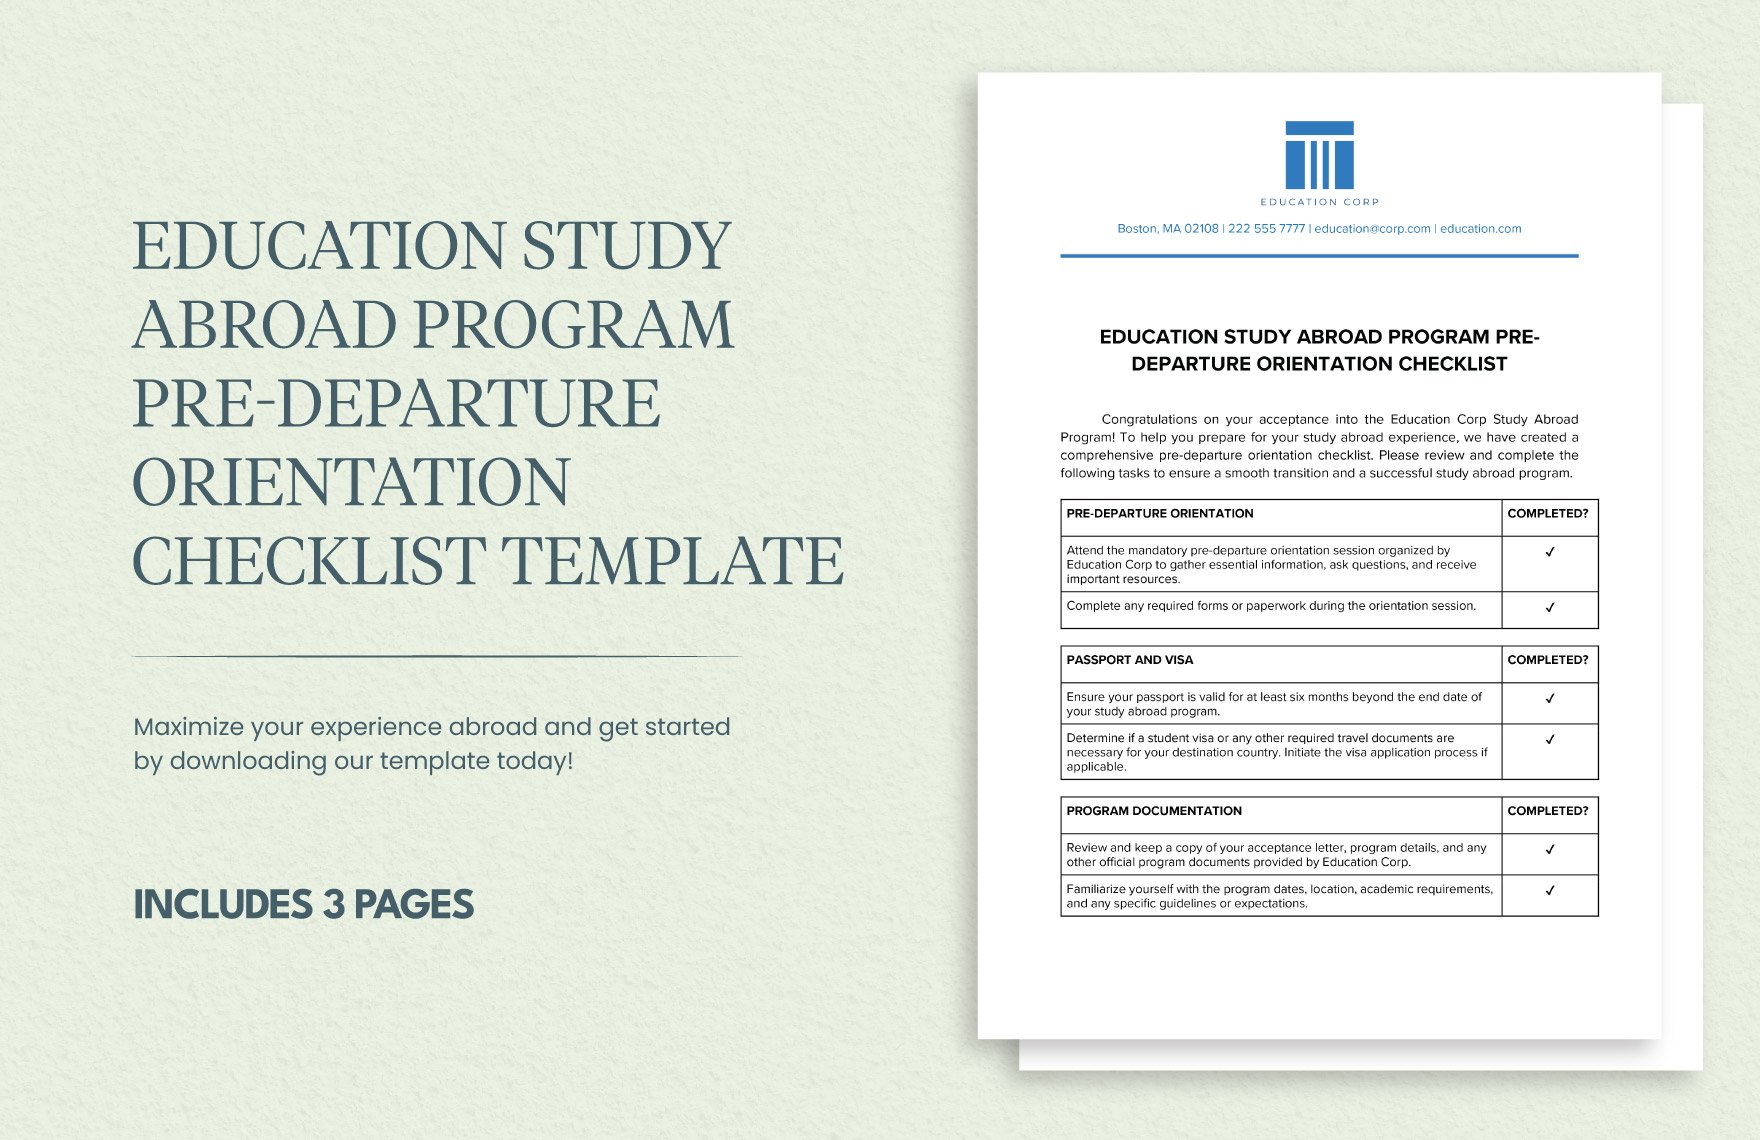 Education Study Abroad Program Pre-Departure Orientation Checklist Template